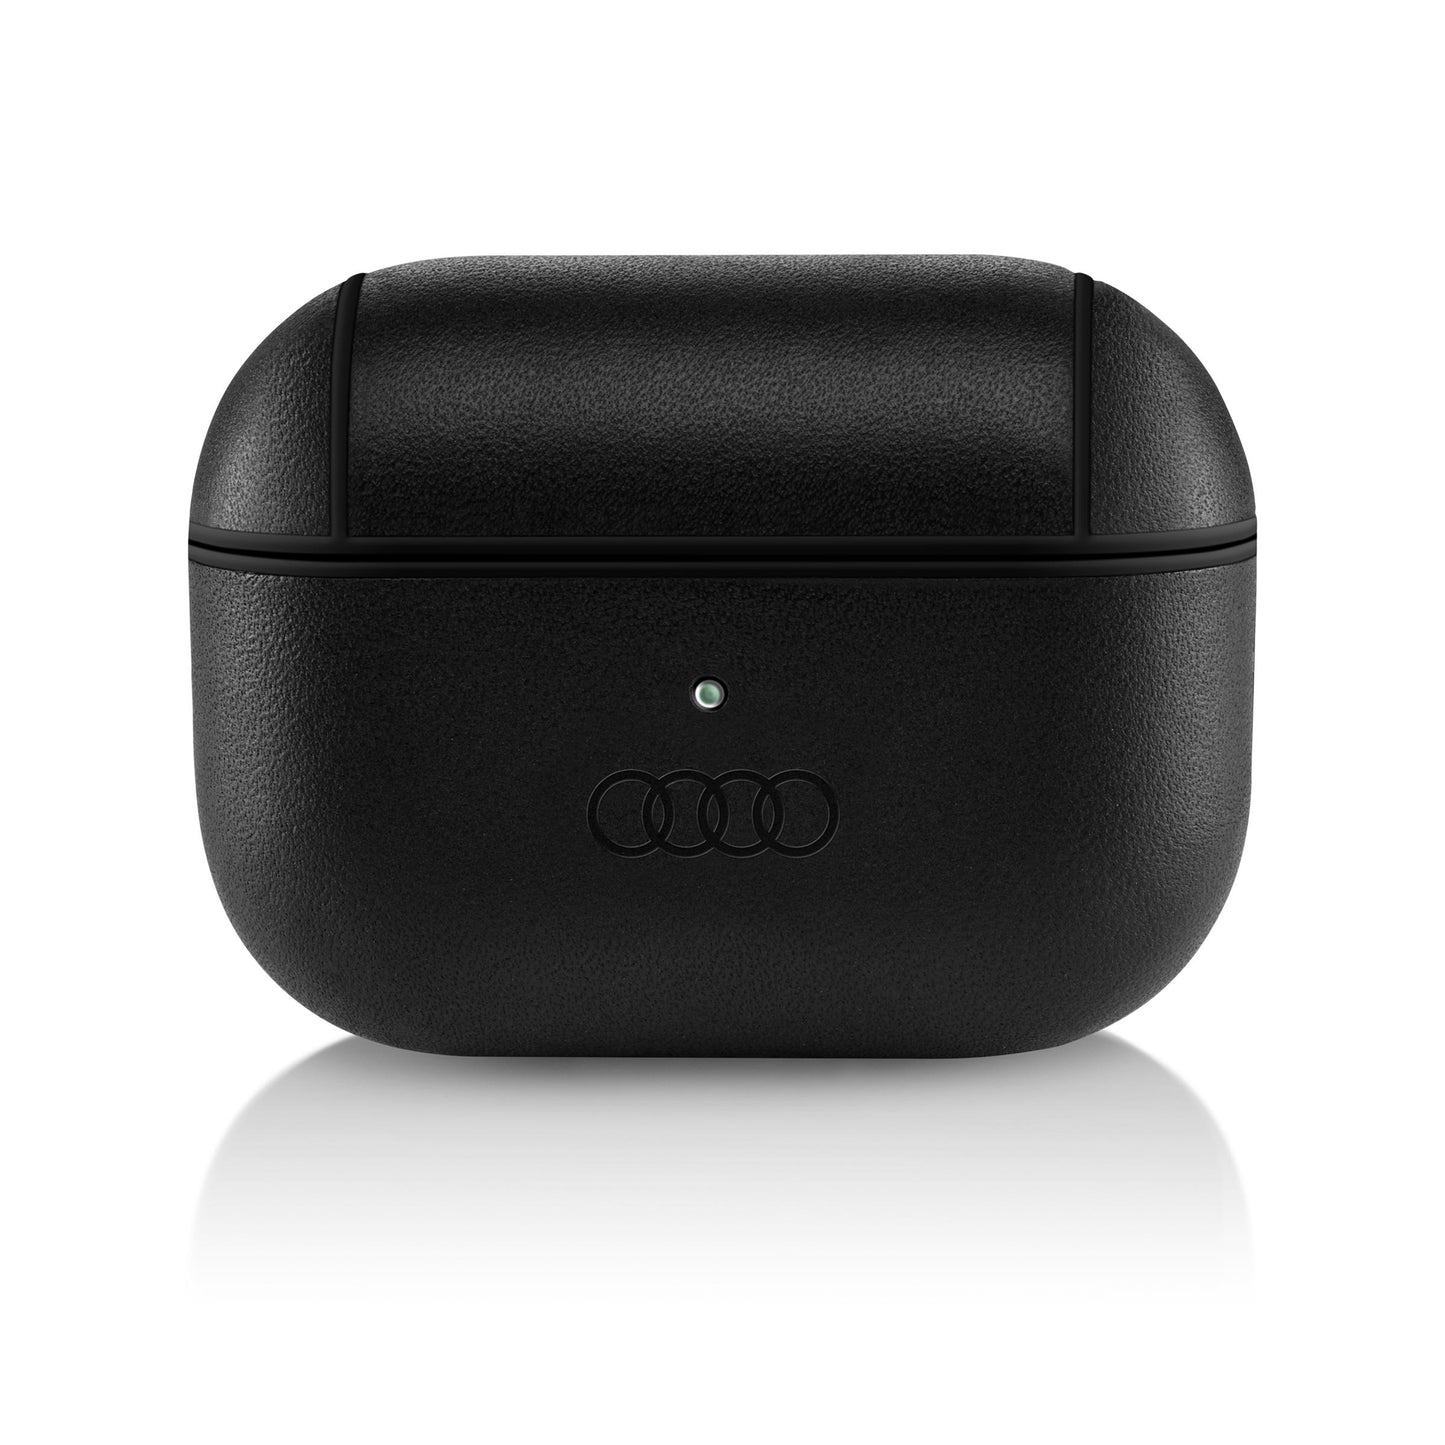 Audi case, Airpods Pro, black leather